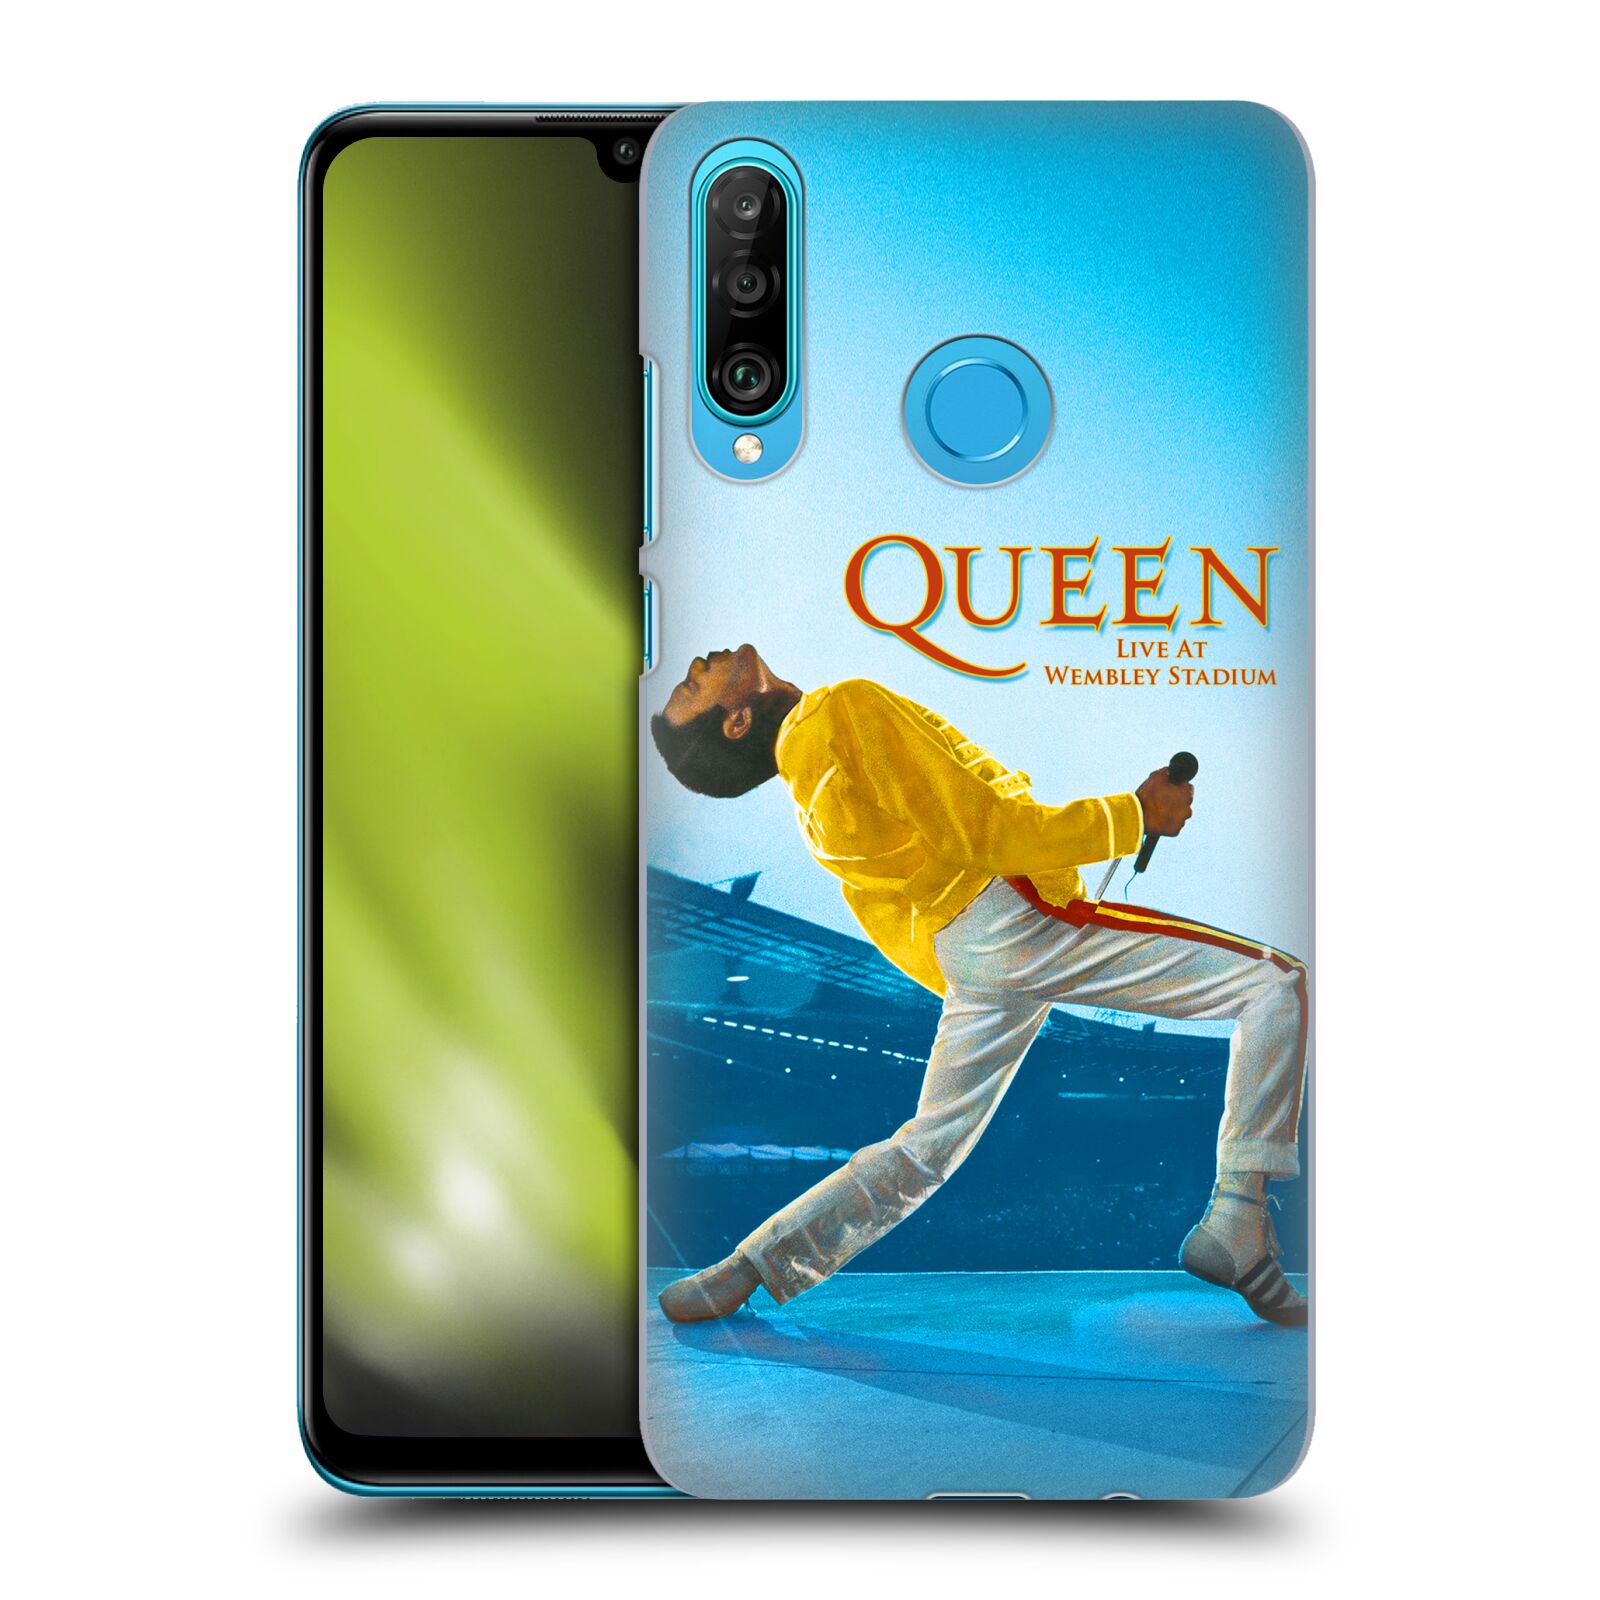 Pouzdro na mobil Huawei P30 LITE - HEAD CASE - zpěvák Queen skupina Freddie Mercury